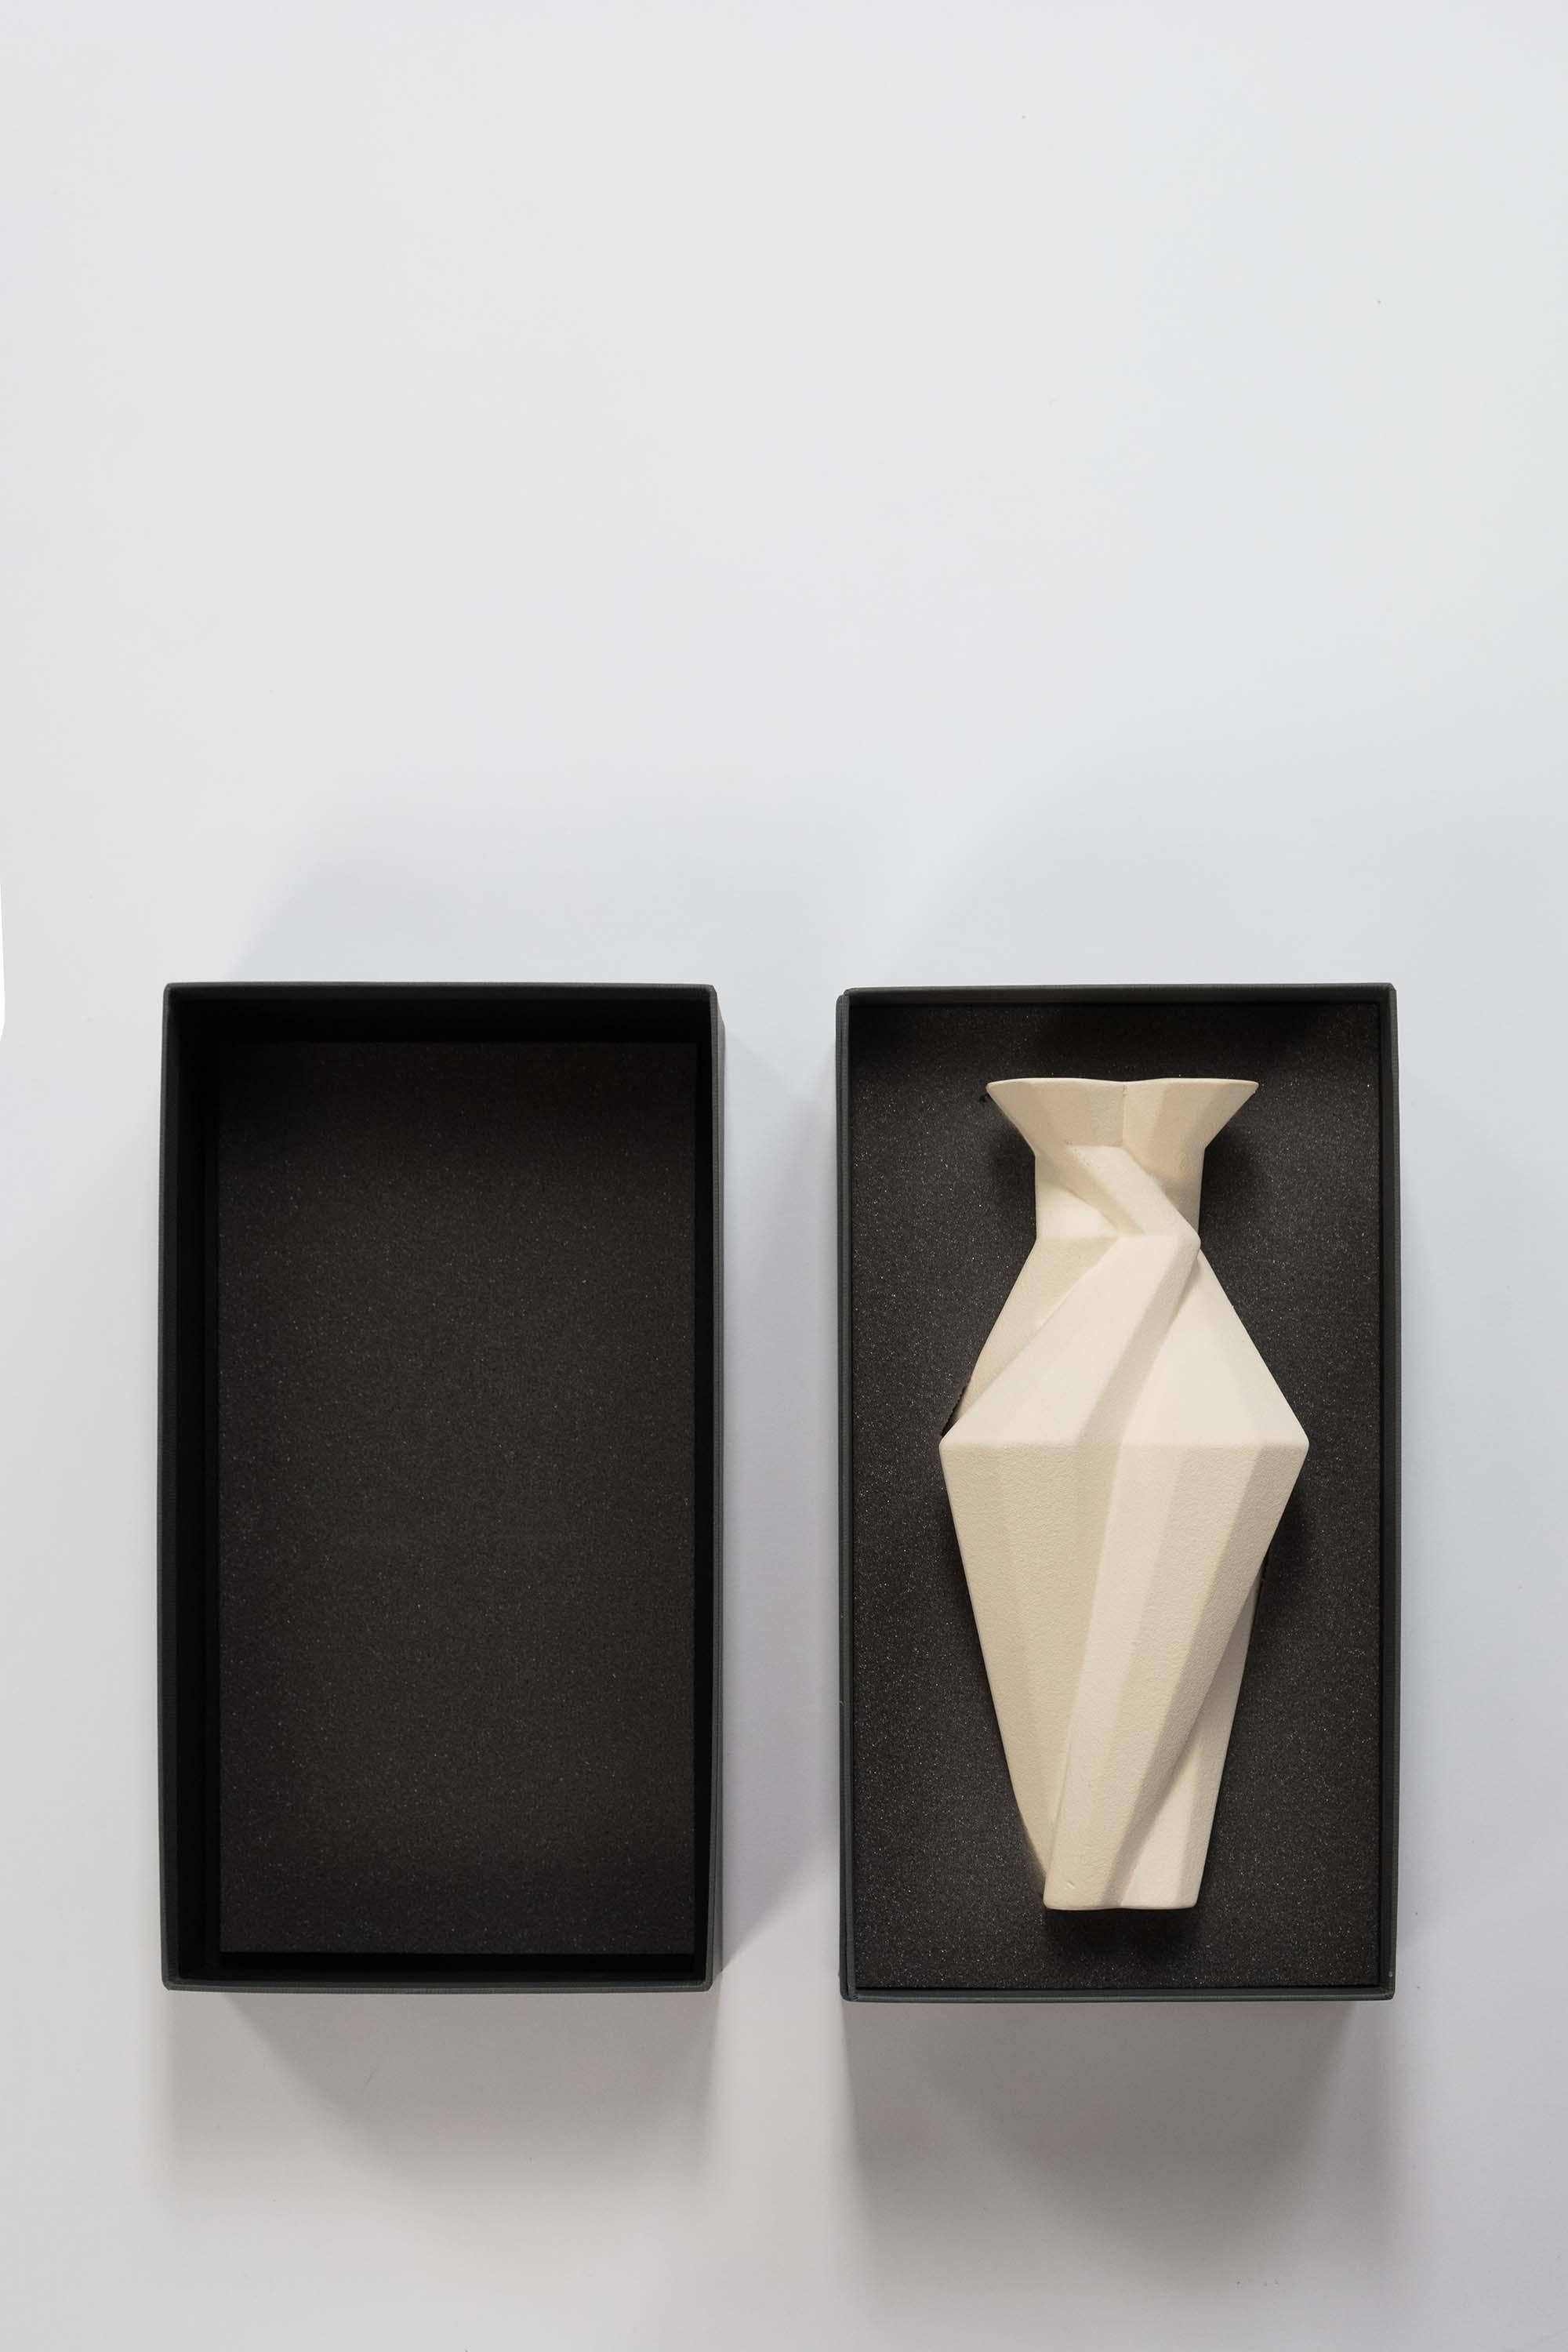 Cast Fortress Spire Vase Red Ceramic Geometric Contemporary, Lara Bohinc, in Stock For Sale